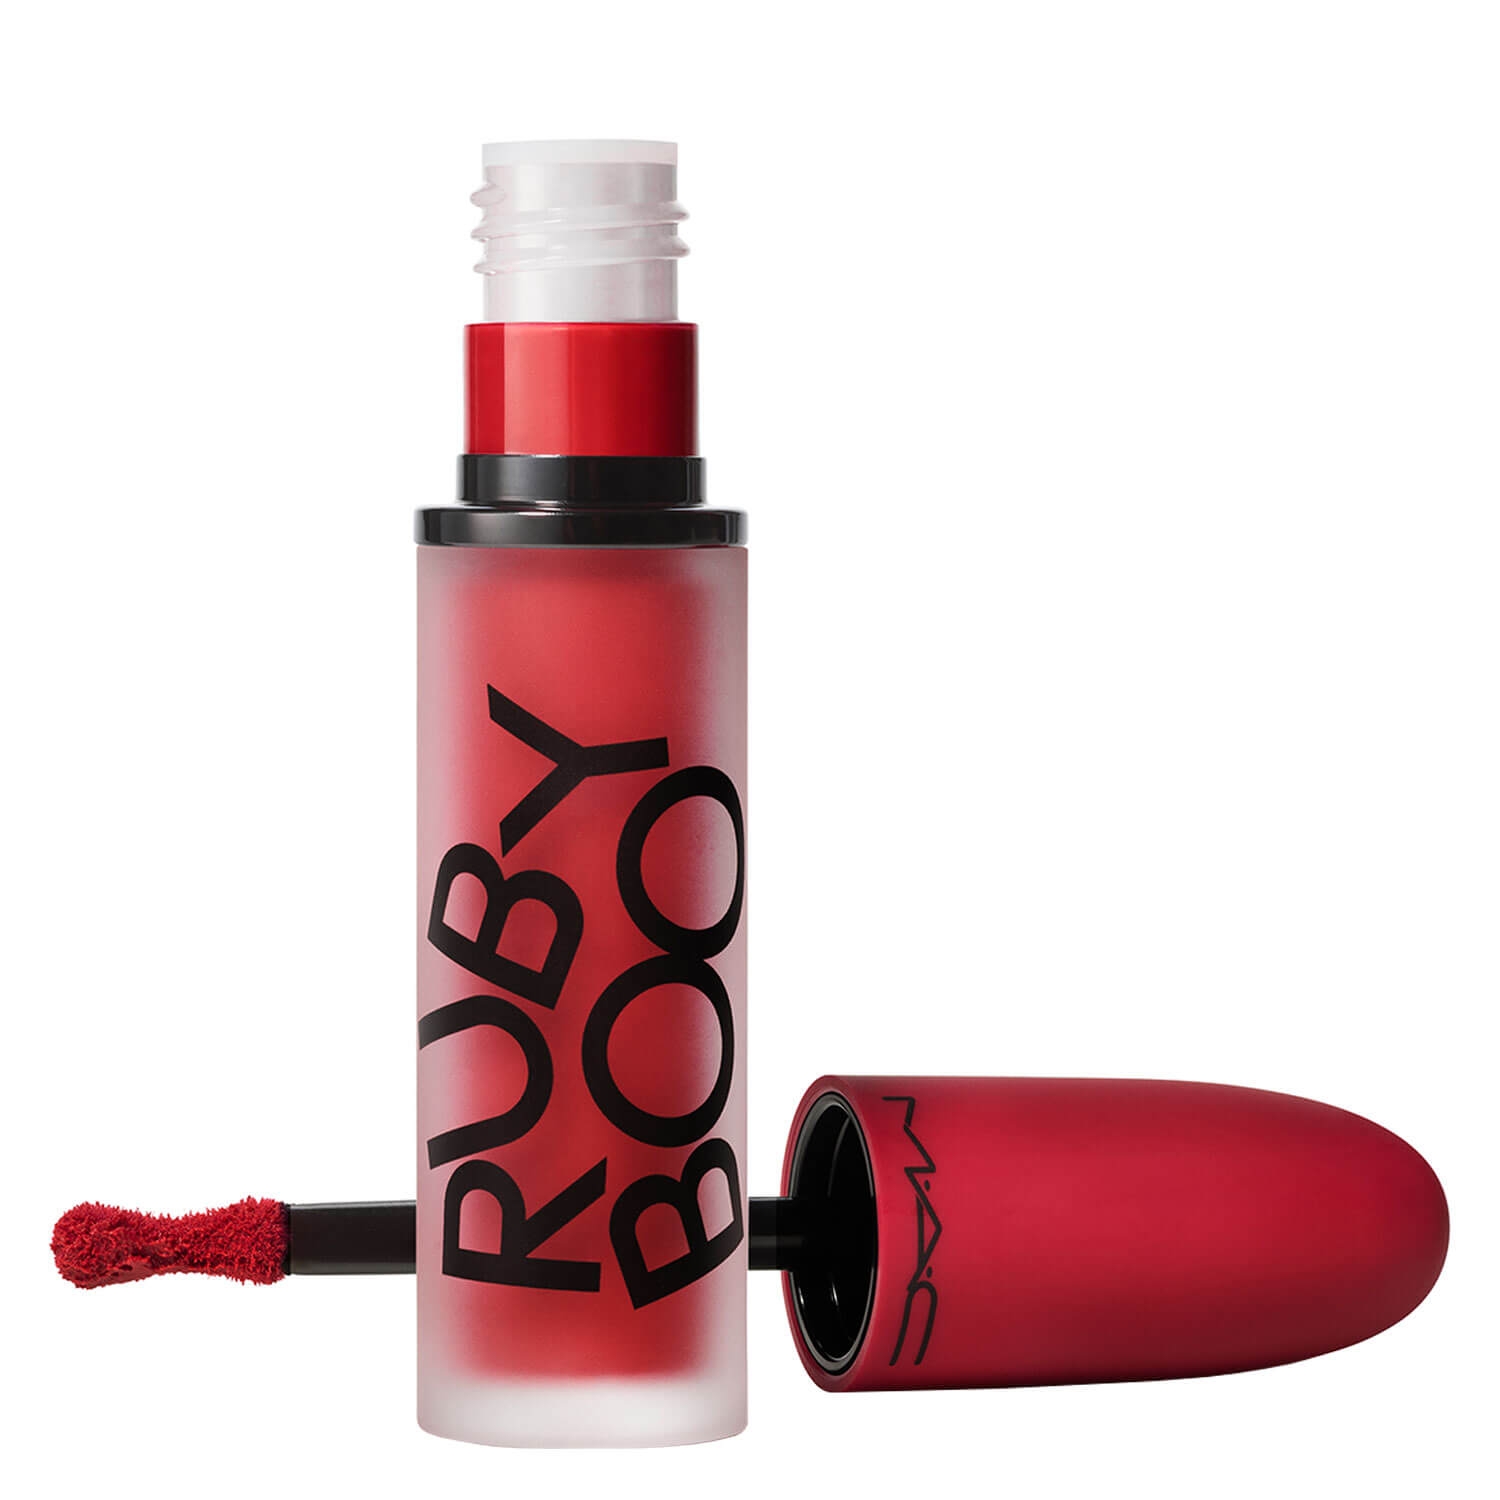 Produktbild von Rubys Crew - Powder Kiss Liquid Lipcolour Ruby Boo